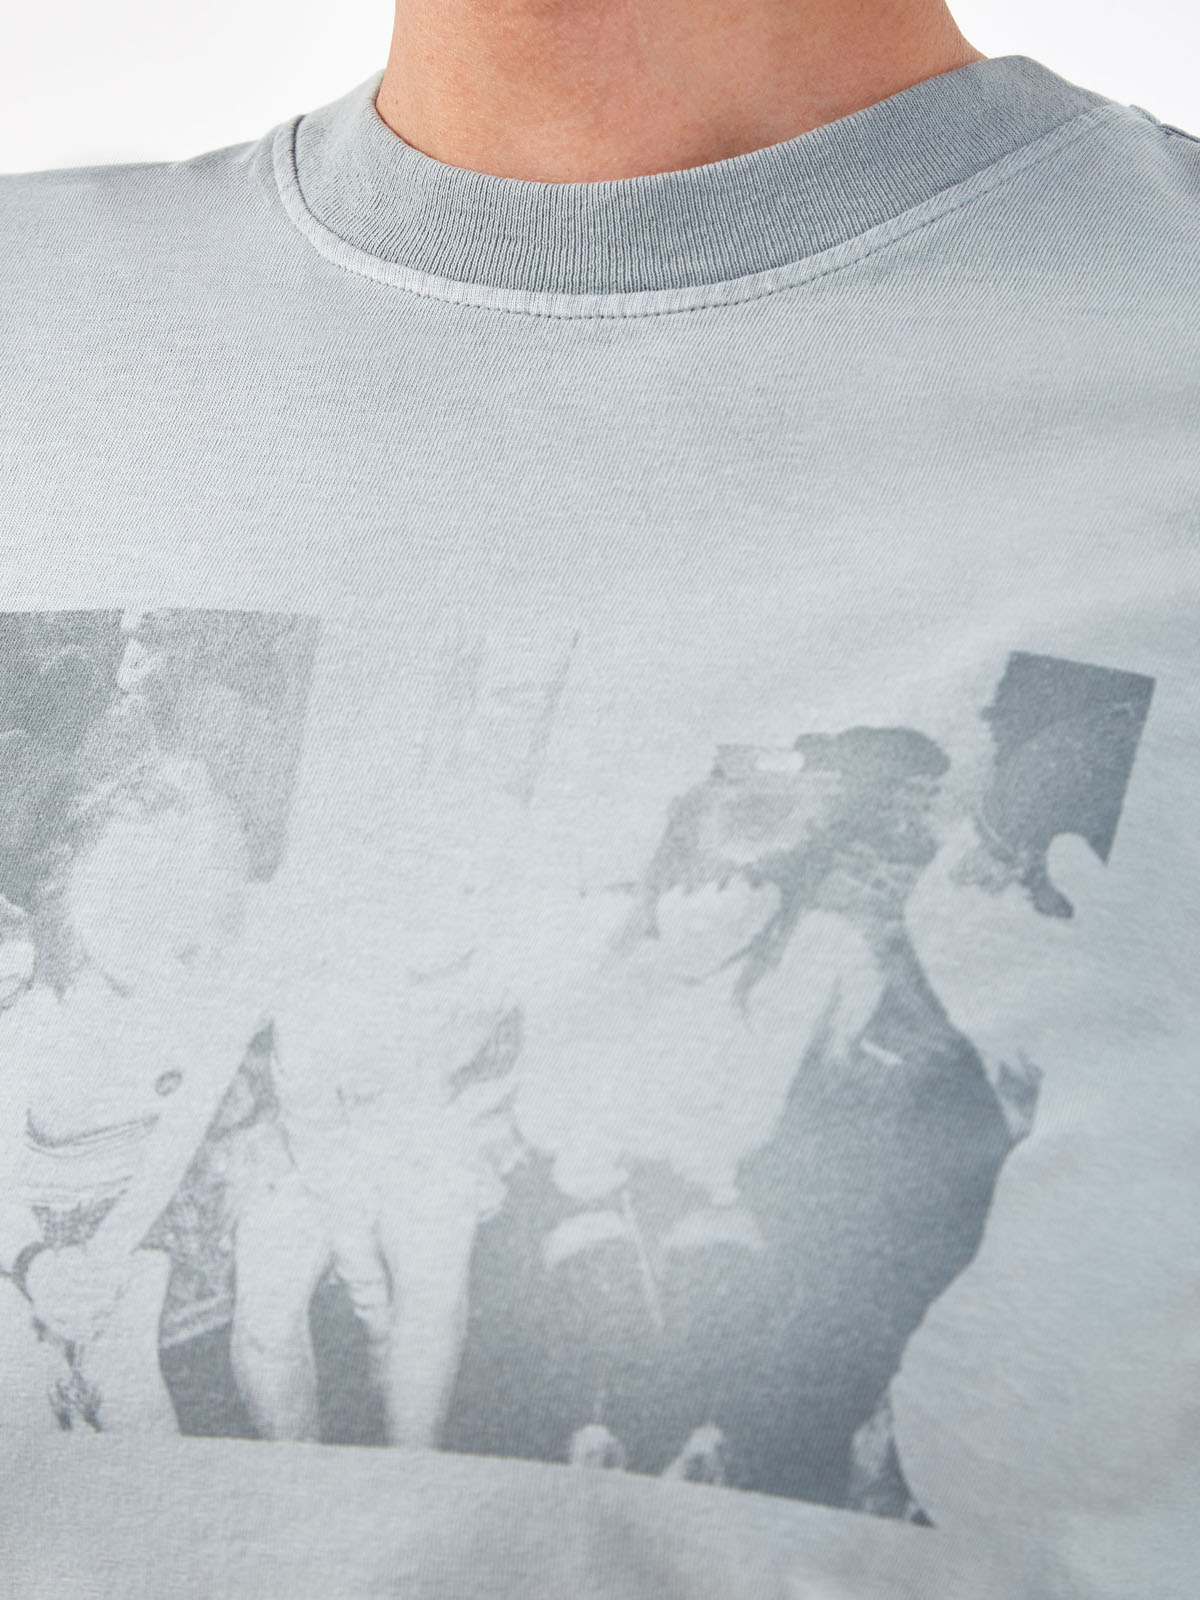 Хлопковая футболка T-Reg из джерси с цифровым принтом DIESEL, цвет серый, размер S;M;L;XL - фото 5